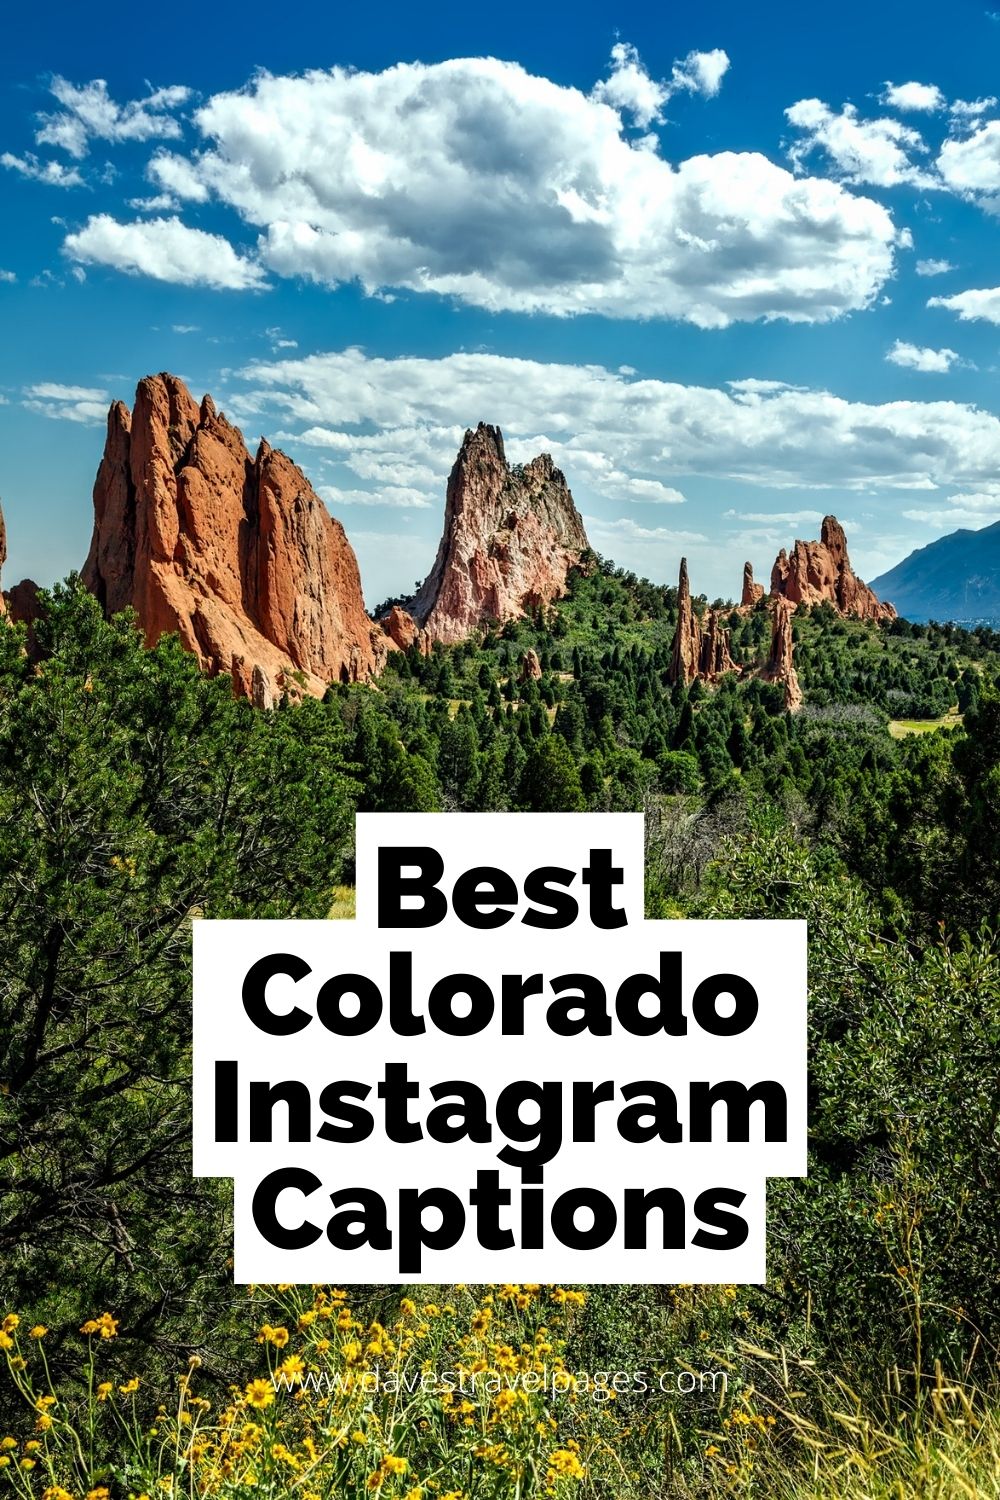 Best Colorado Instagram Captions